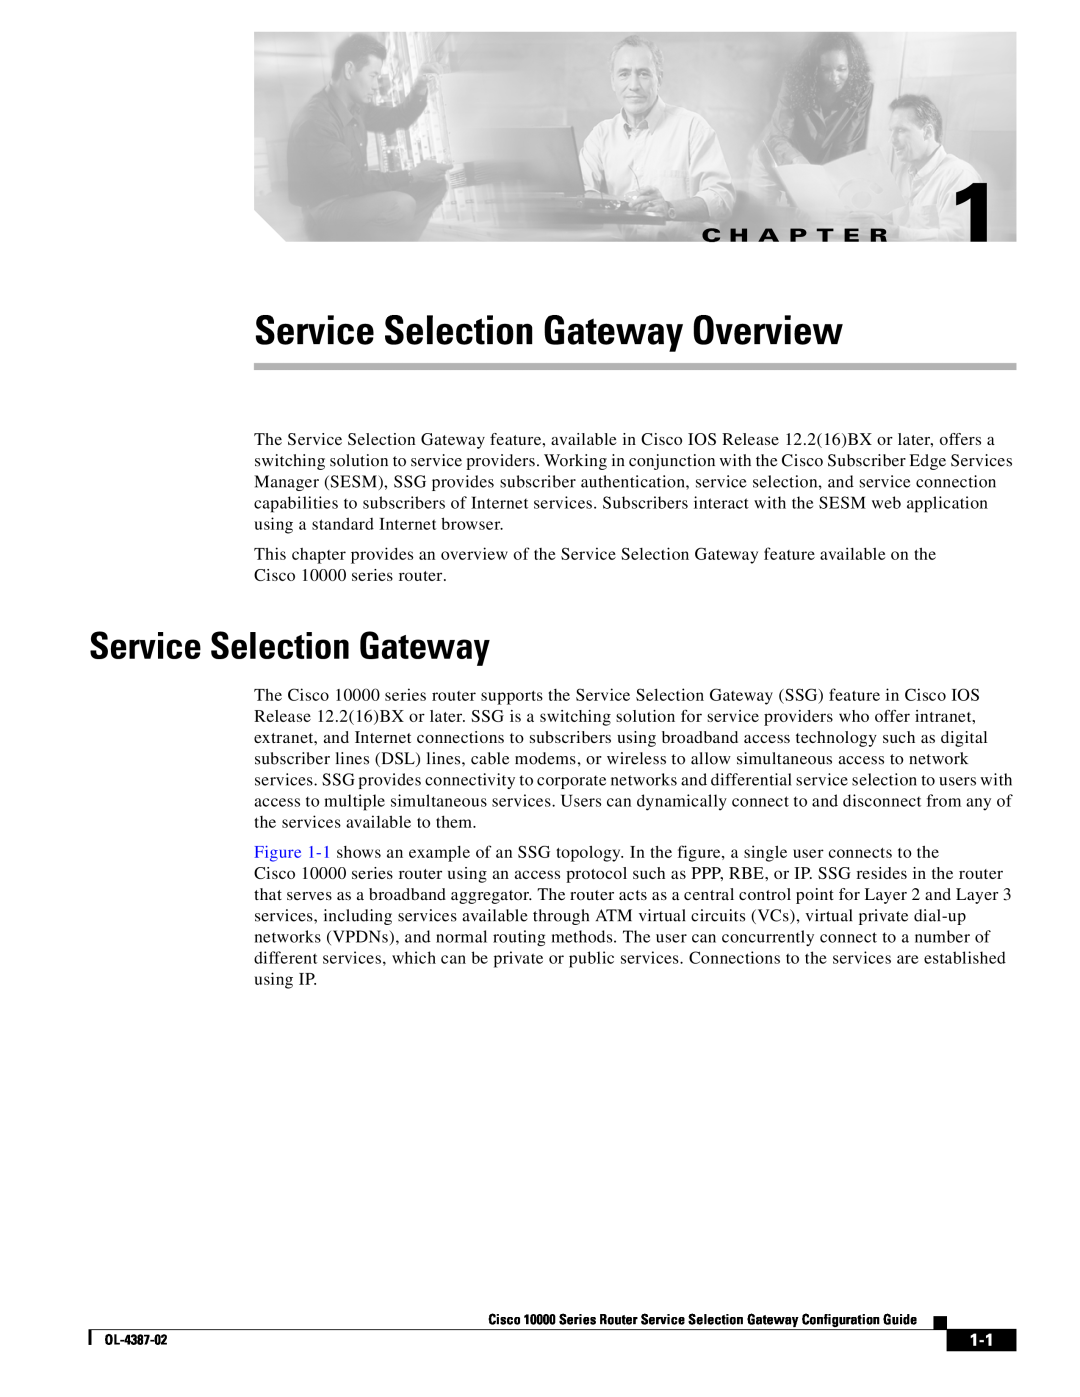 Cisco Systems OL-4387-02 manual Service Selection Gateway Overview, C H A P T E R 